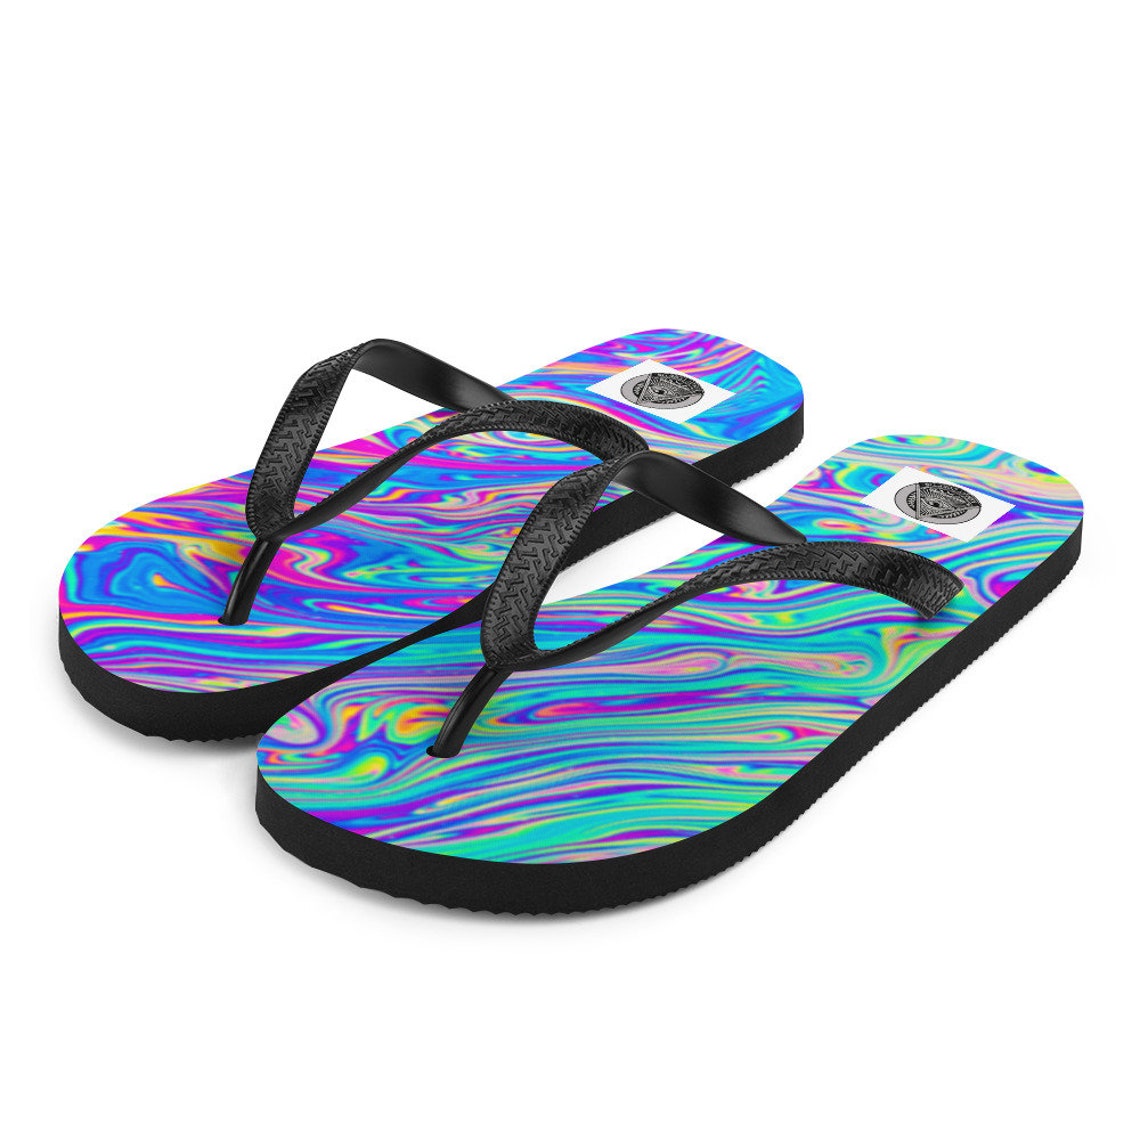 Oil Slick Trippy Flip Flops Beach Sandals Flat Sandals | Etsy